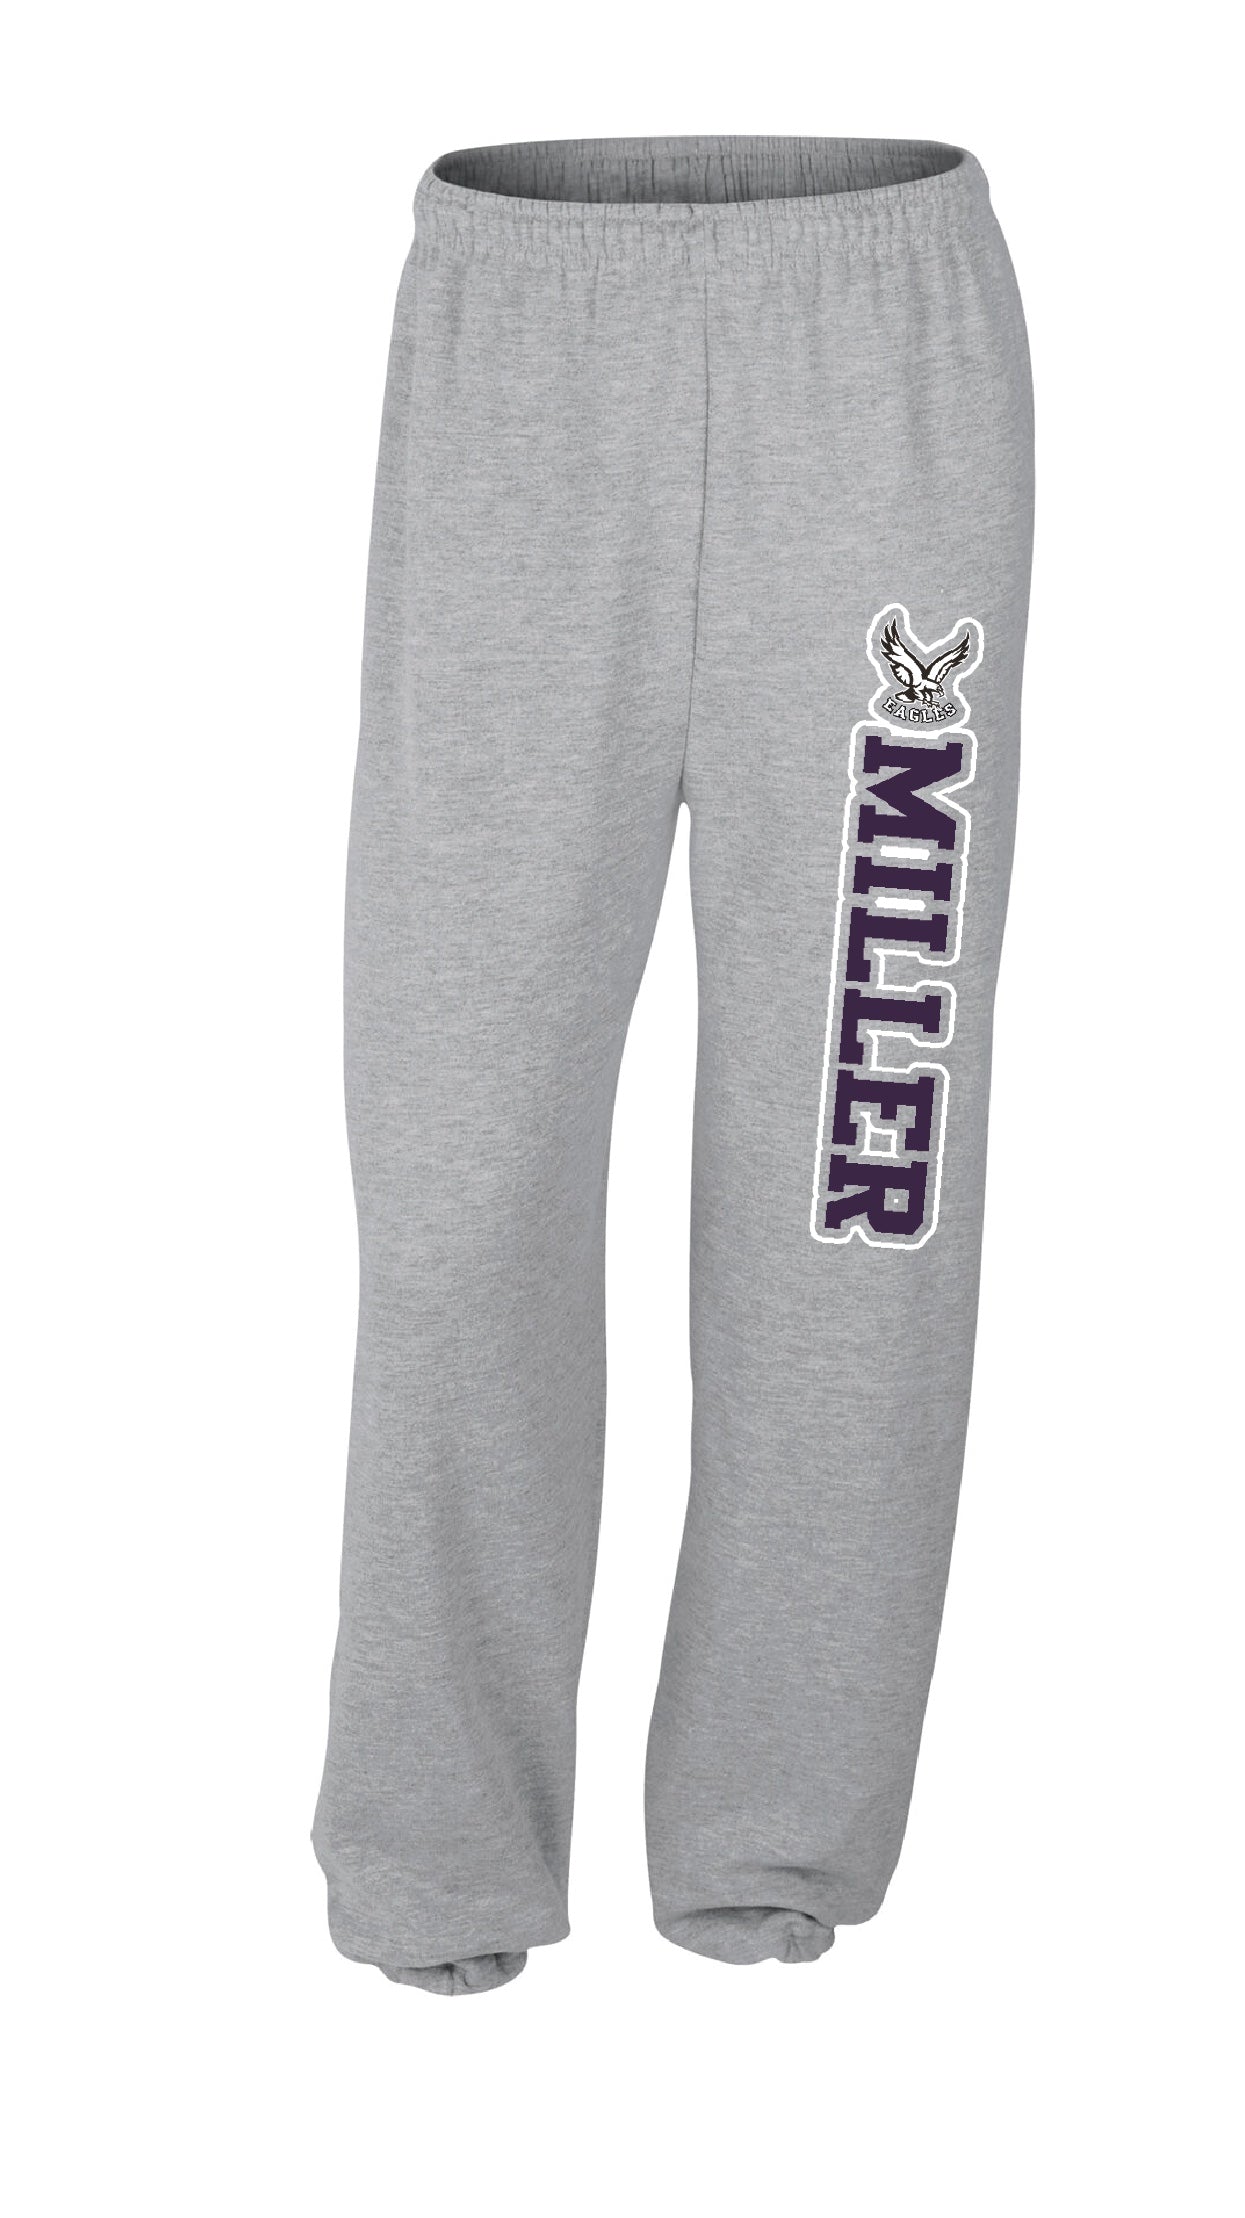 Adult "Miller Spirit Wear" Sweatpants